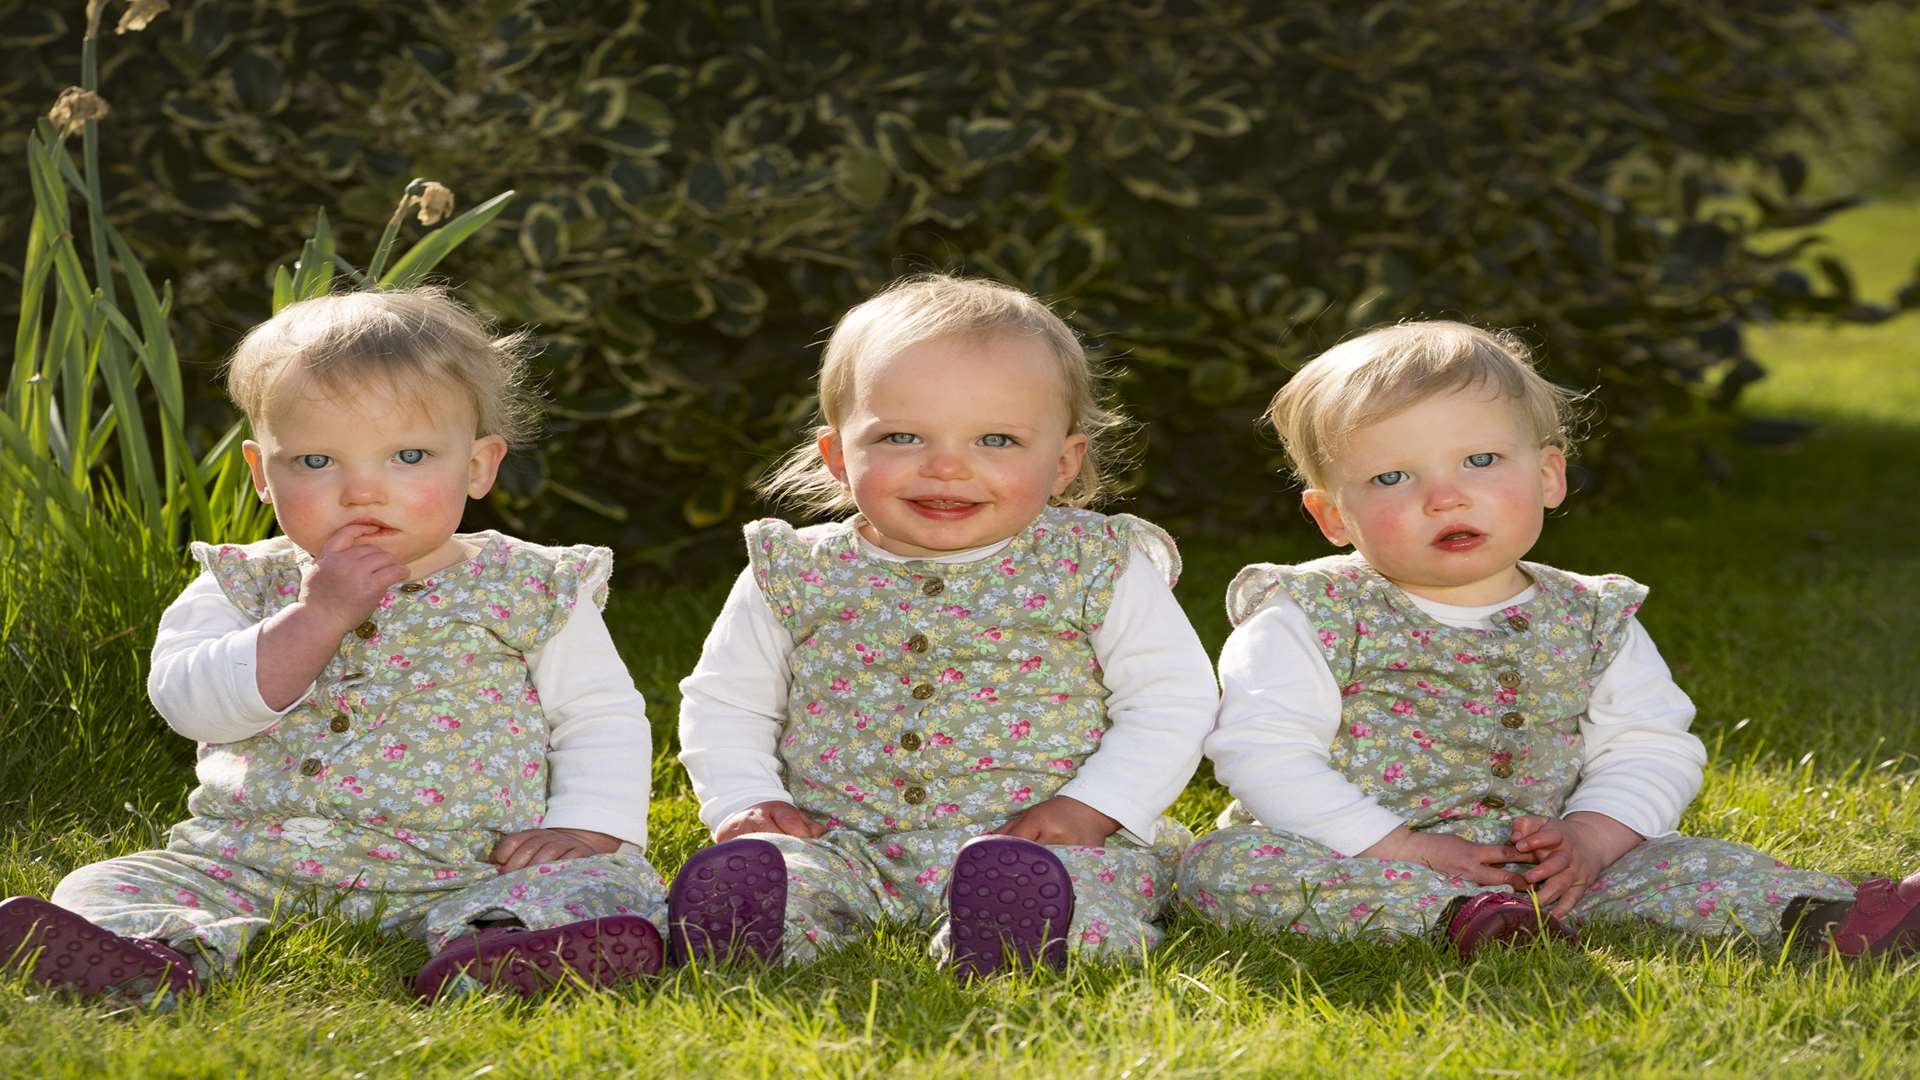 Kathleen, Delilah and Tabitha were born due to a rare phenomenon